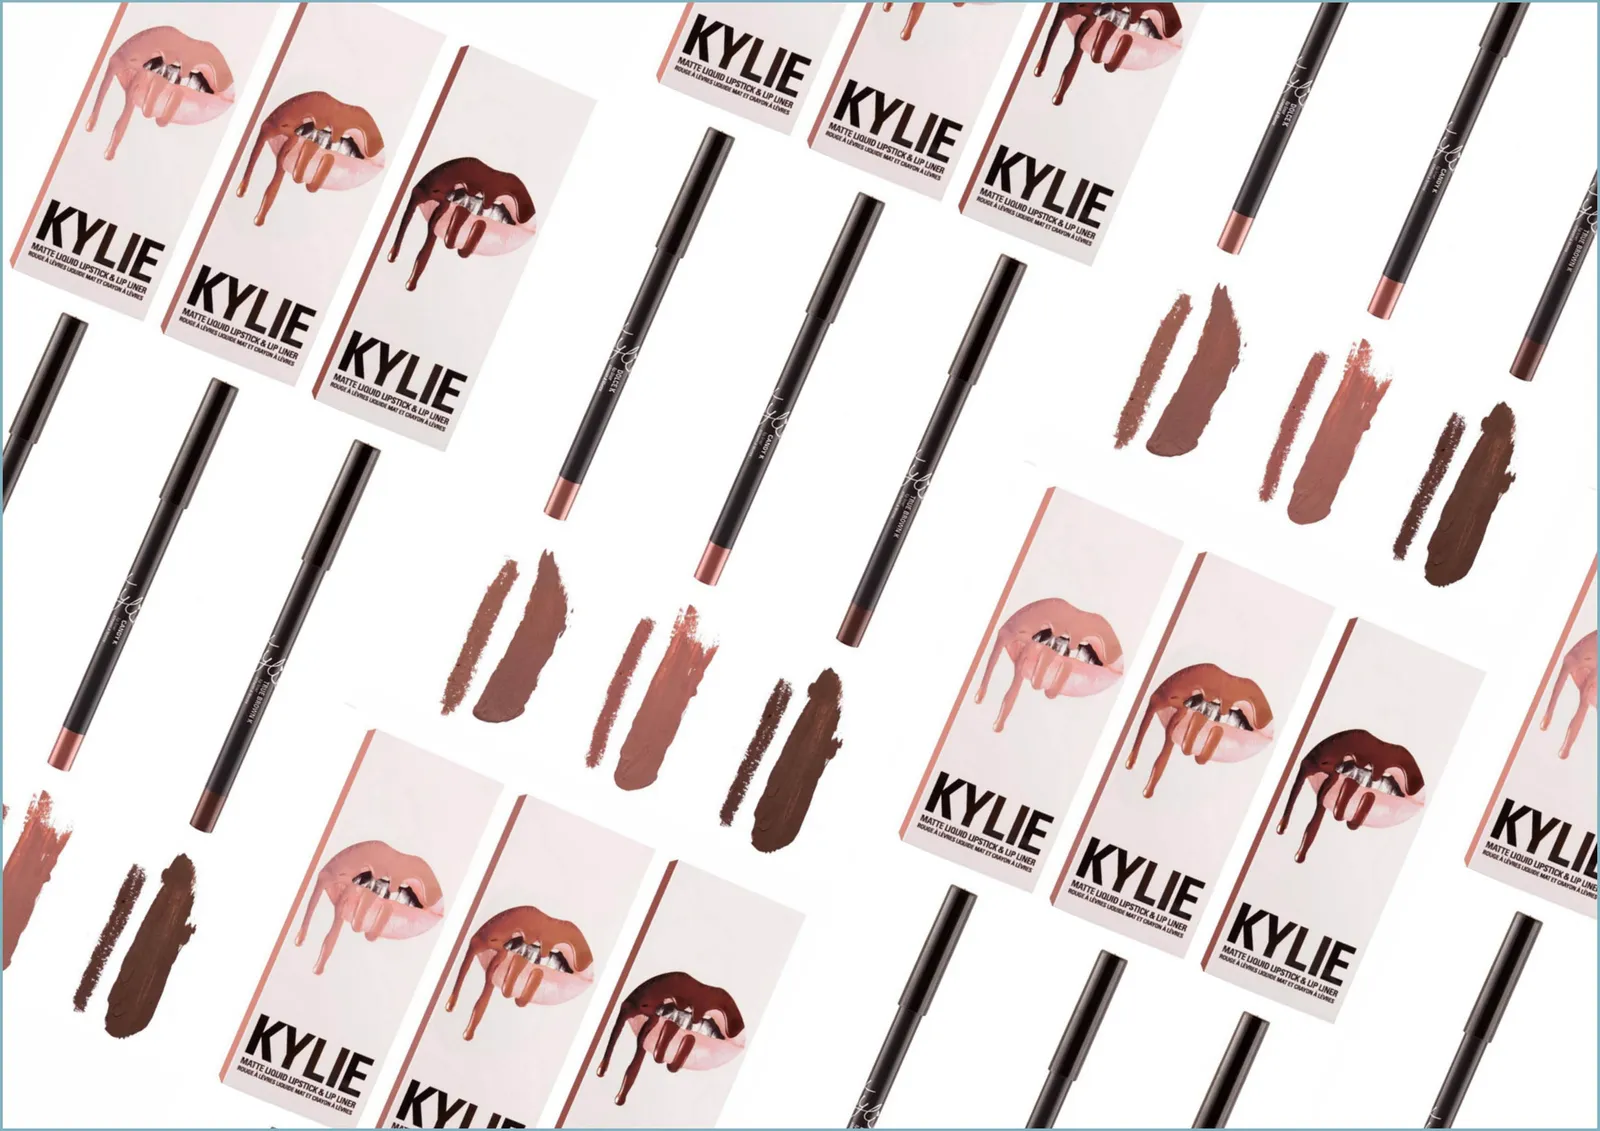 Lip Kit Terbaru Kylie Jenner Membludak Membuat Google Lumpuh